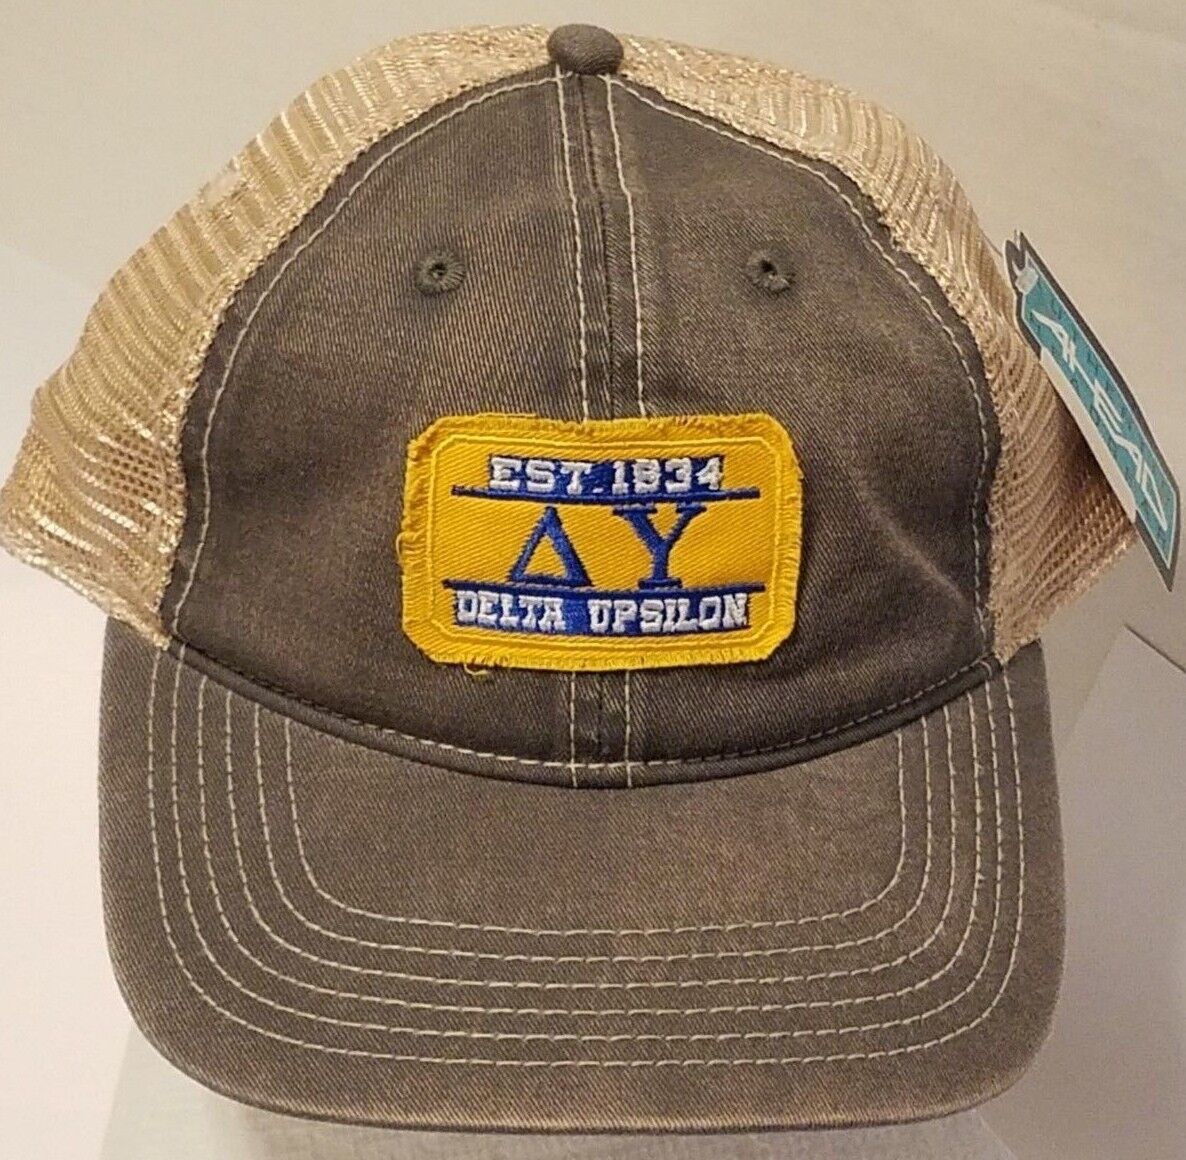 Delta Upsilon Gray Baseball Cap - Adjustable Hat